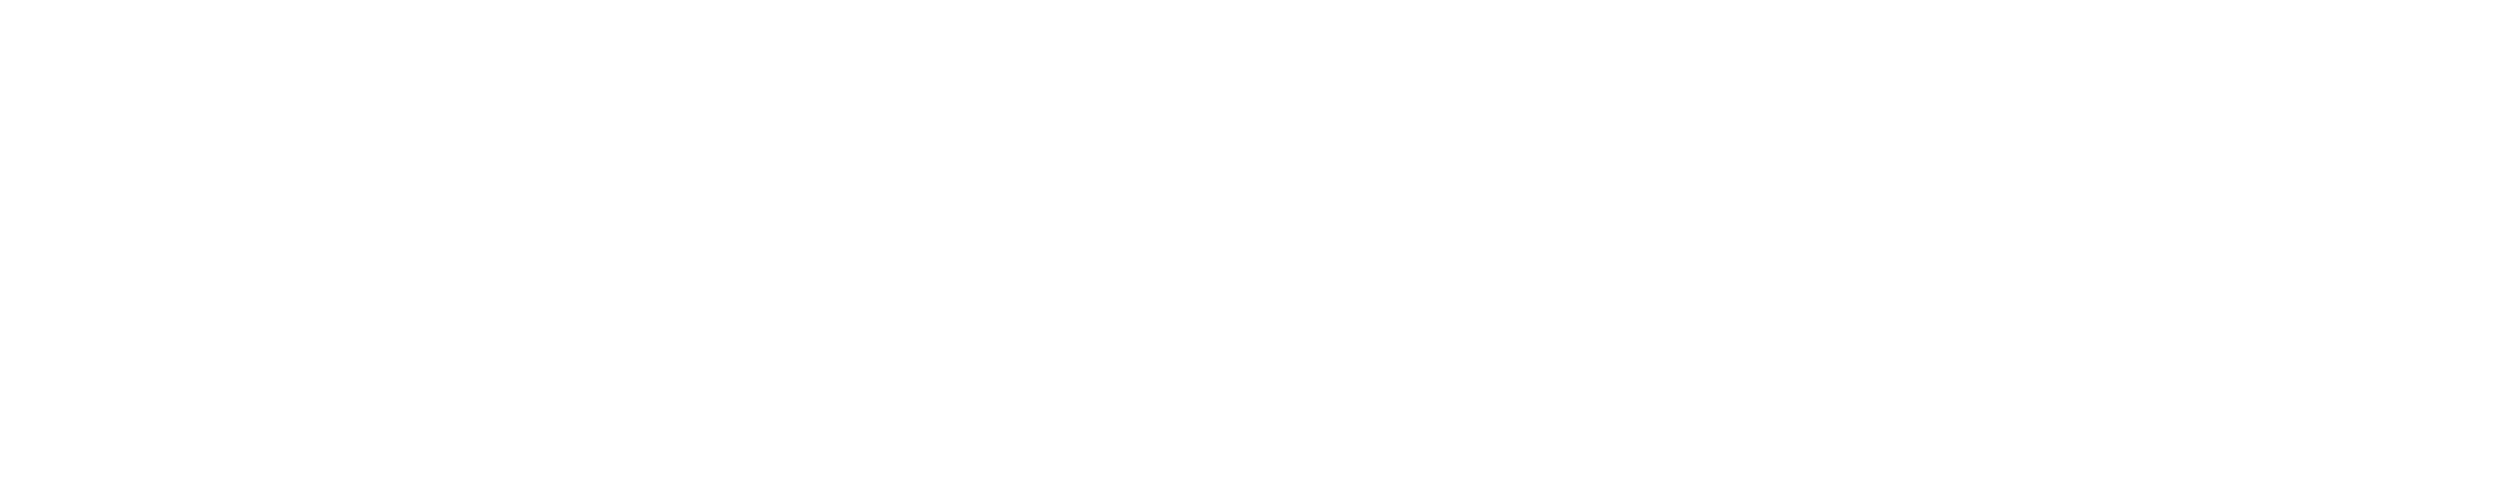 Echo-IQ-logo